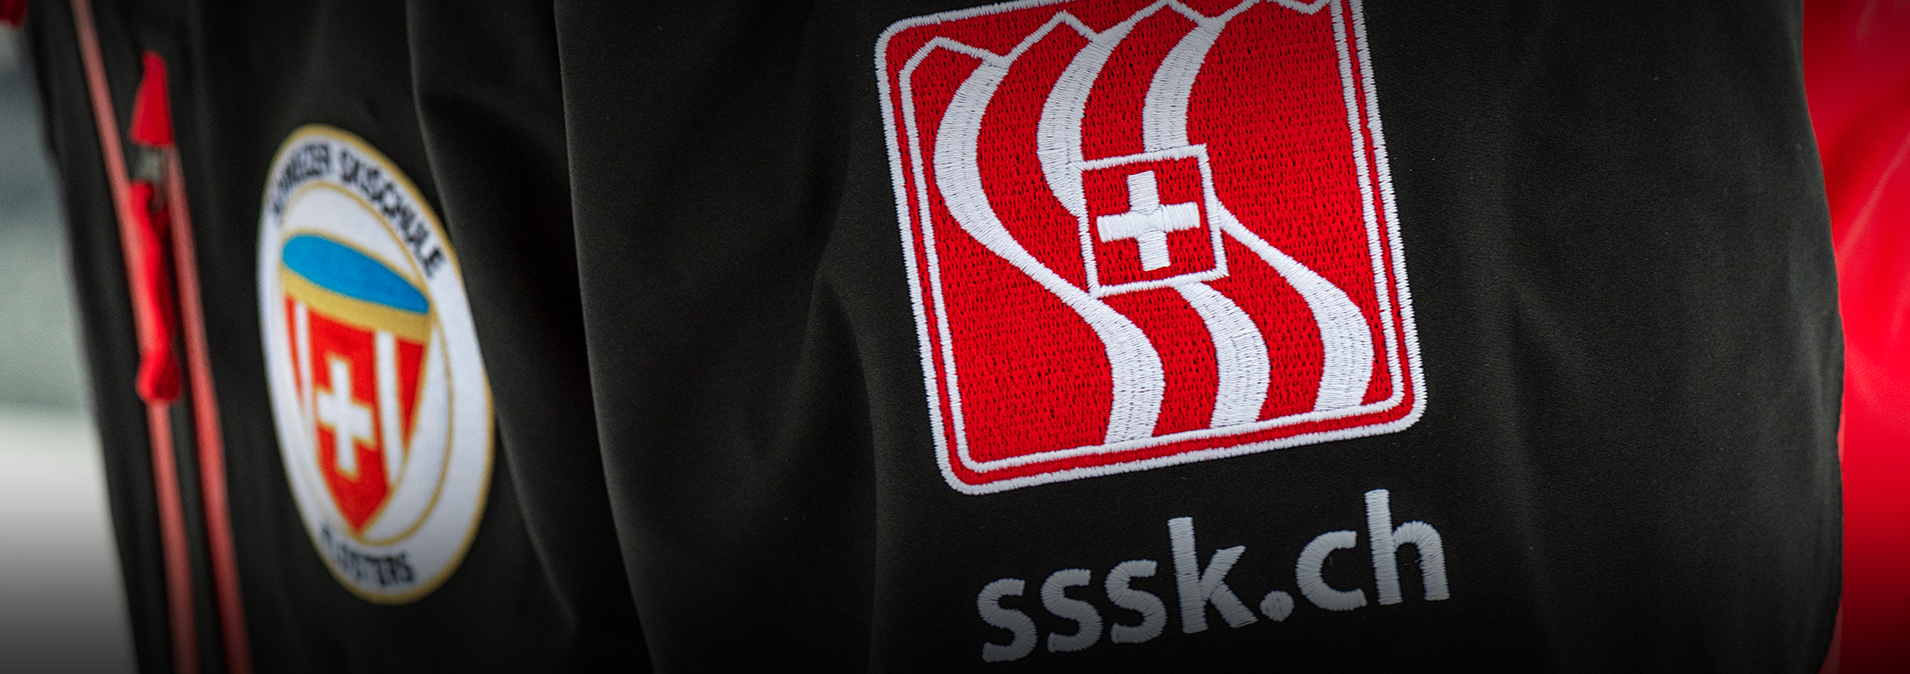 Logo Swiss Ski School Klosters on ski suit